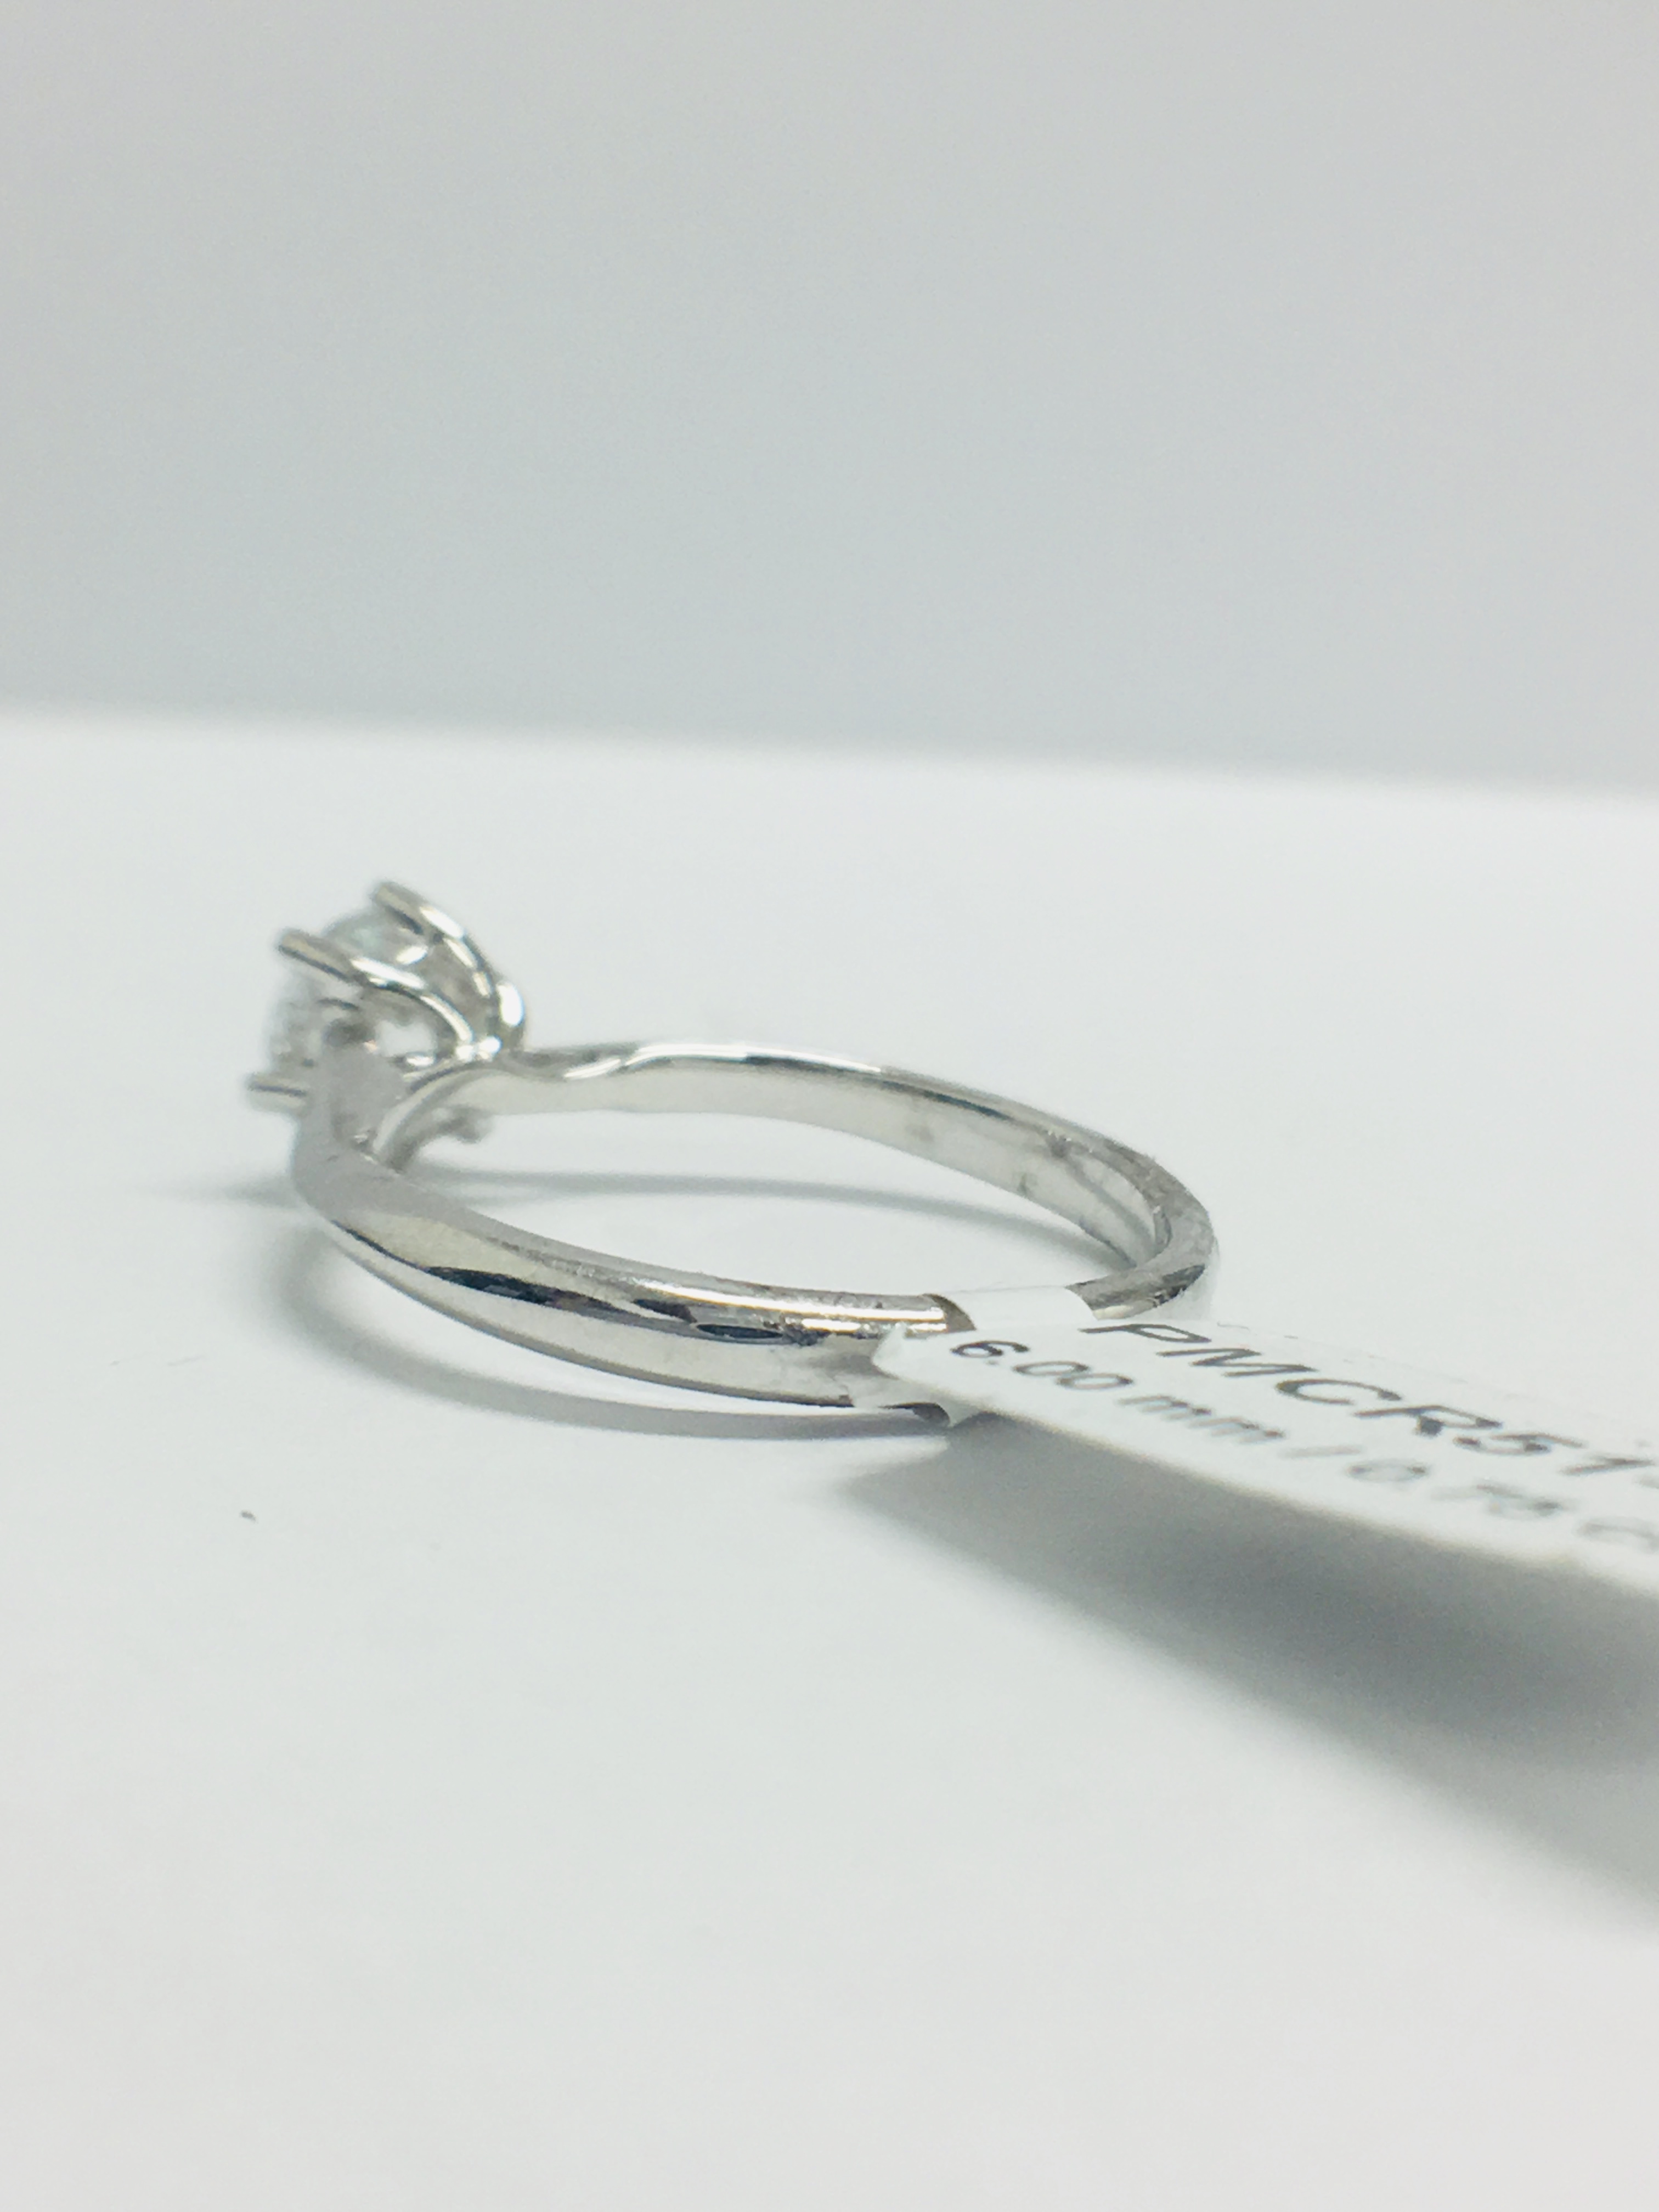 Platinum Solitaire 4 Claw Diamond Ring, - Image 4 of 8